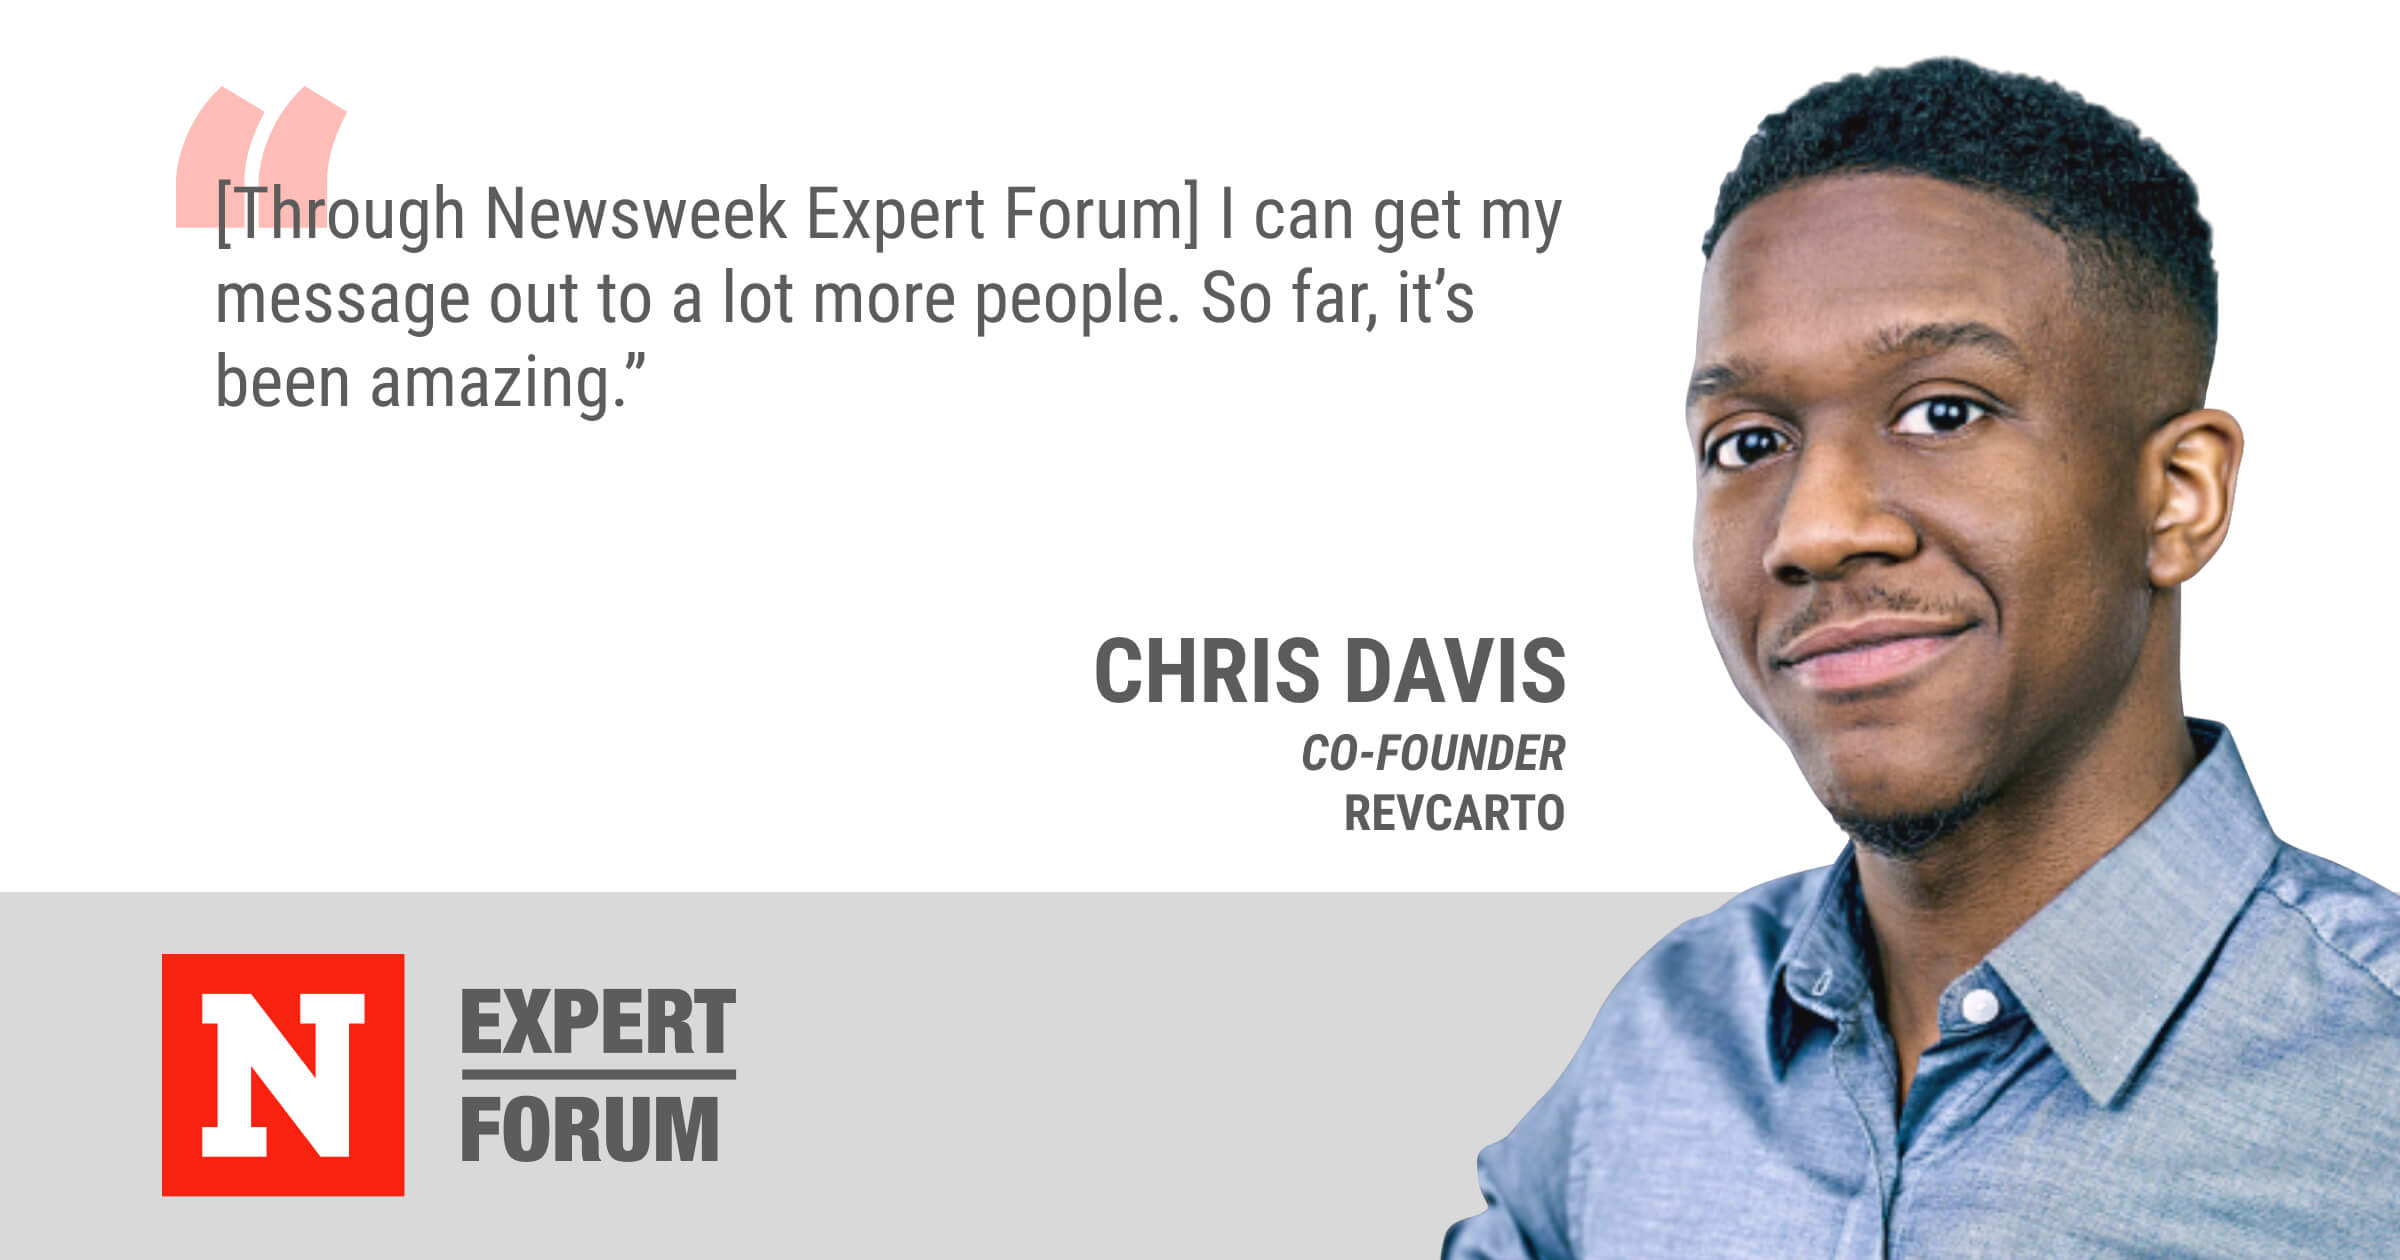 Newsweek Expert Forum member Chris Davis